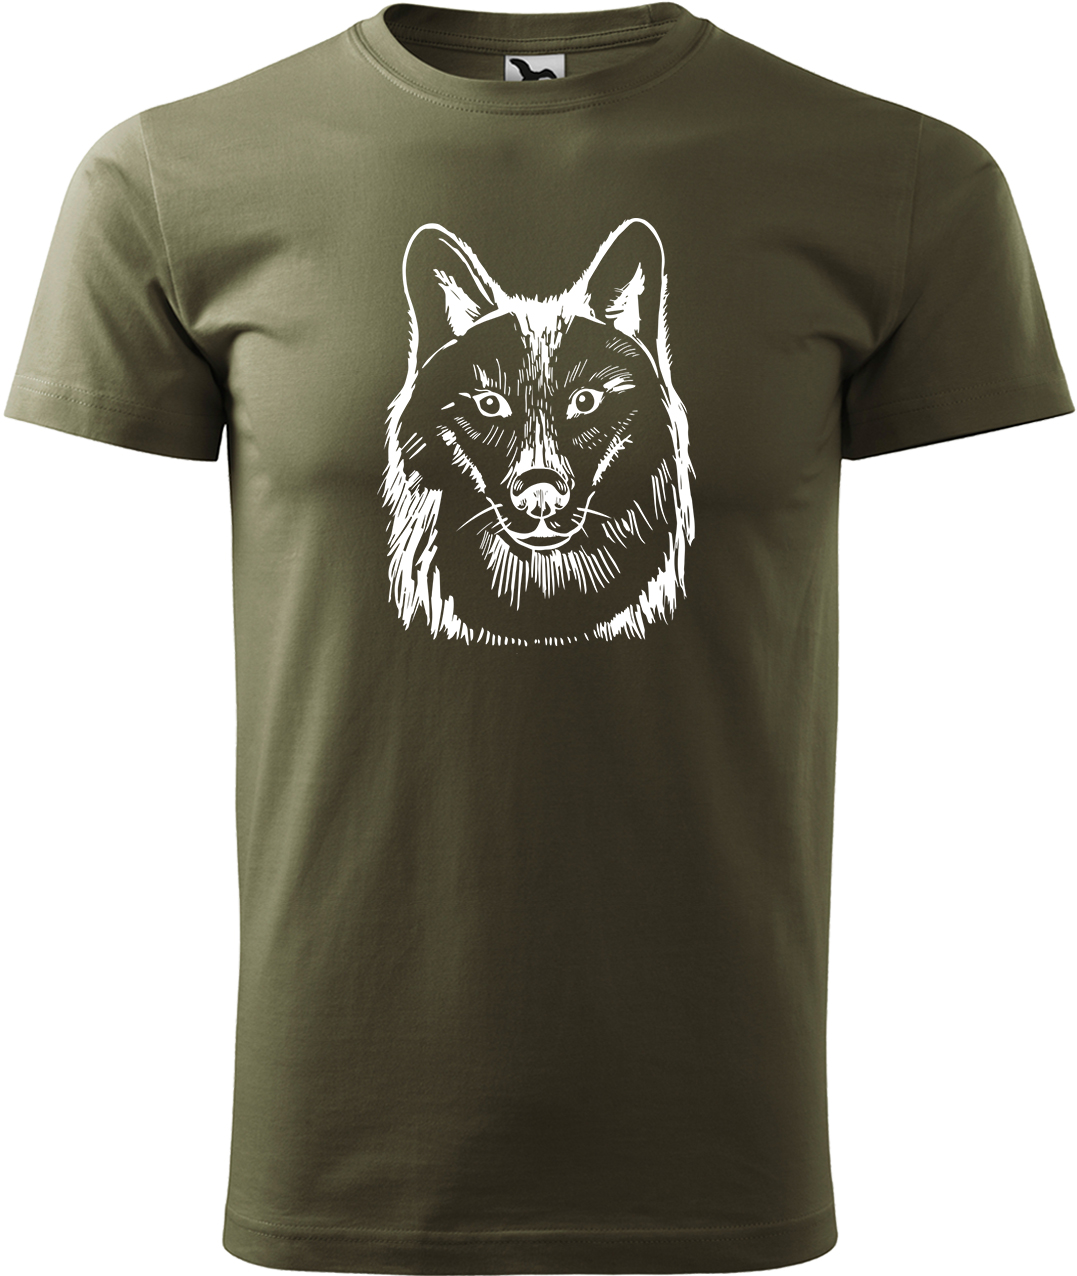 Pánské tričko s vlkem - Kresba vlka Velikost: 3XL, Barva: Military (69), Střih: pánský